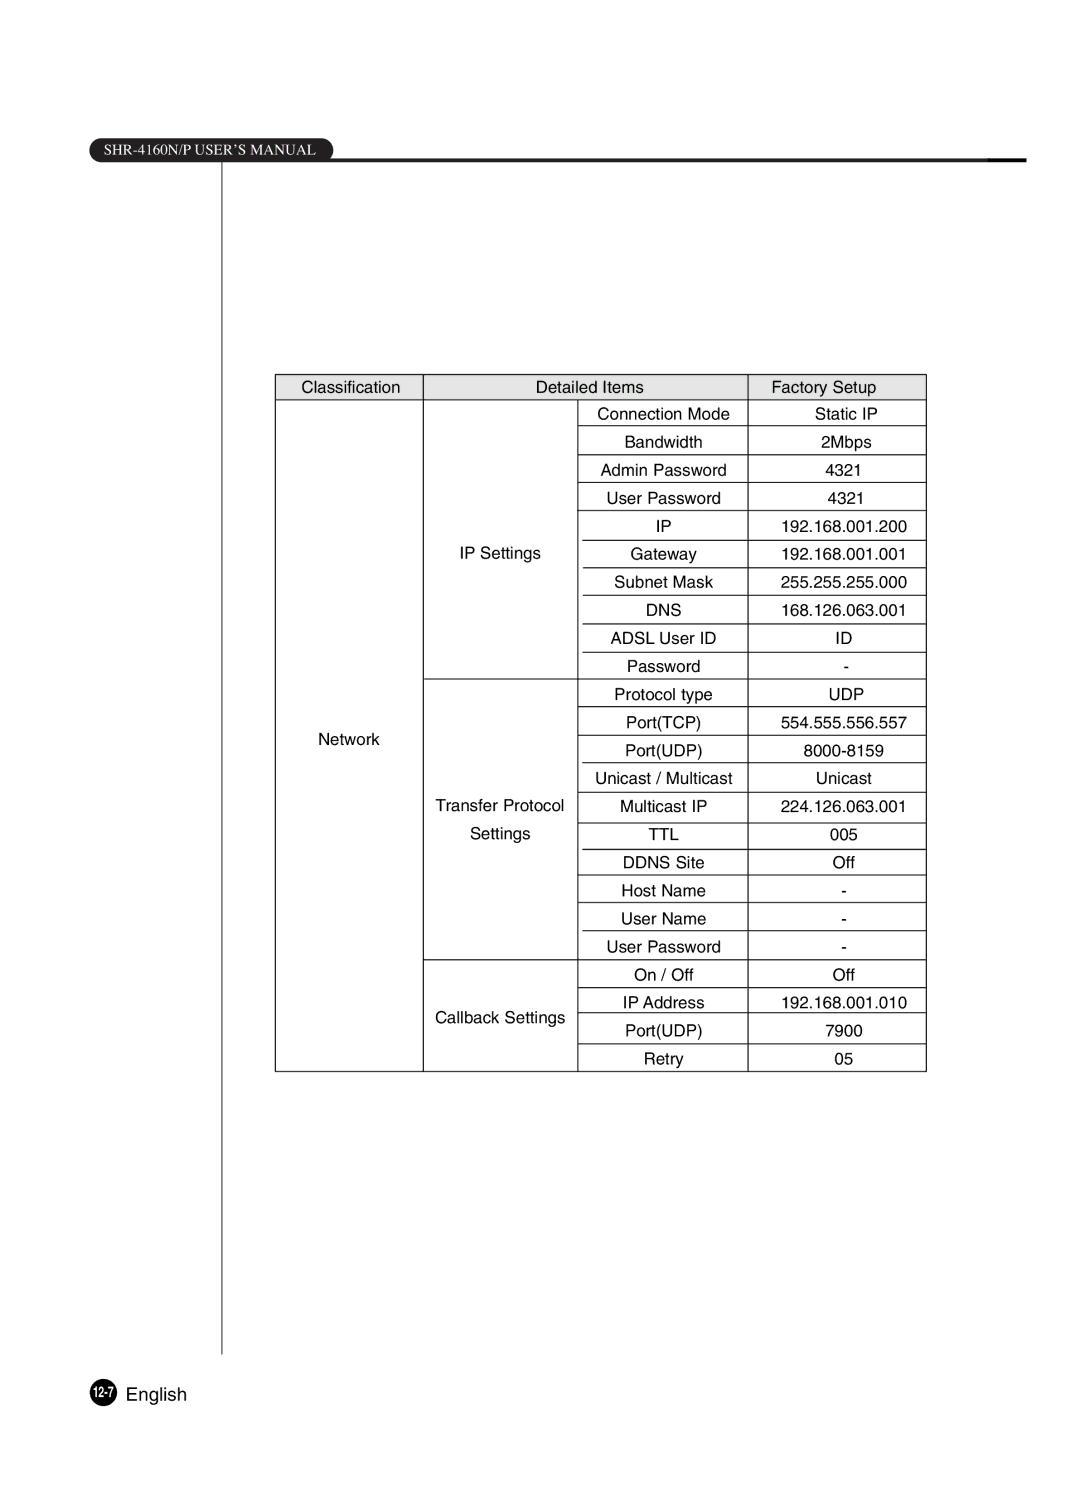 Samsung SHR-4160P manual 12-7English, Gateway 